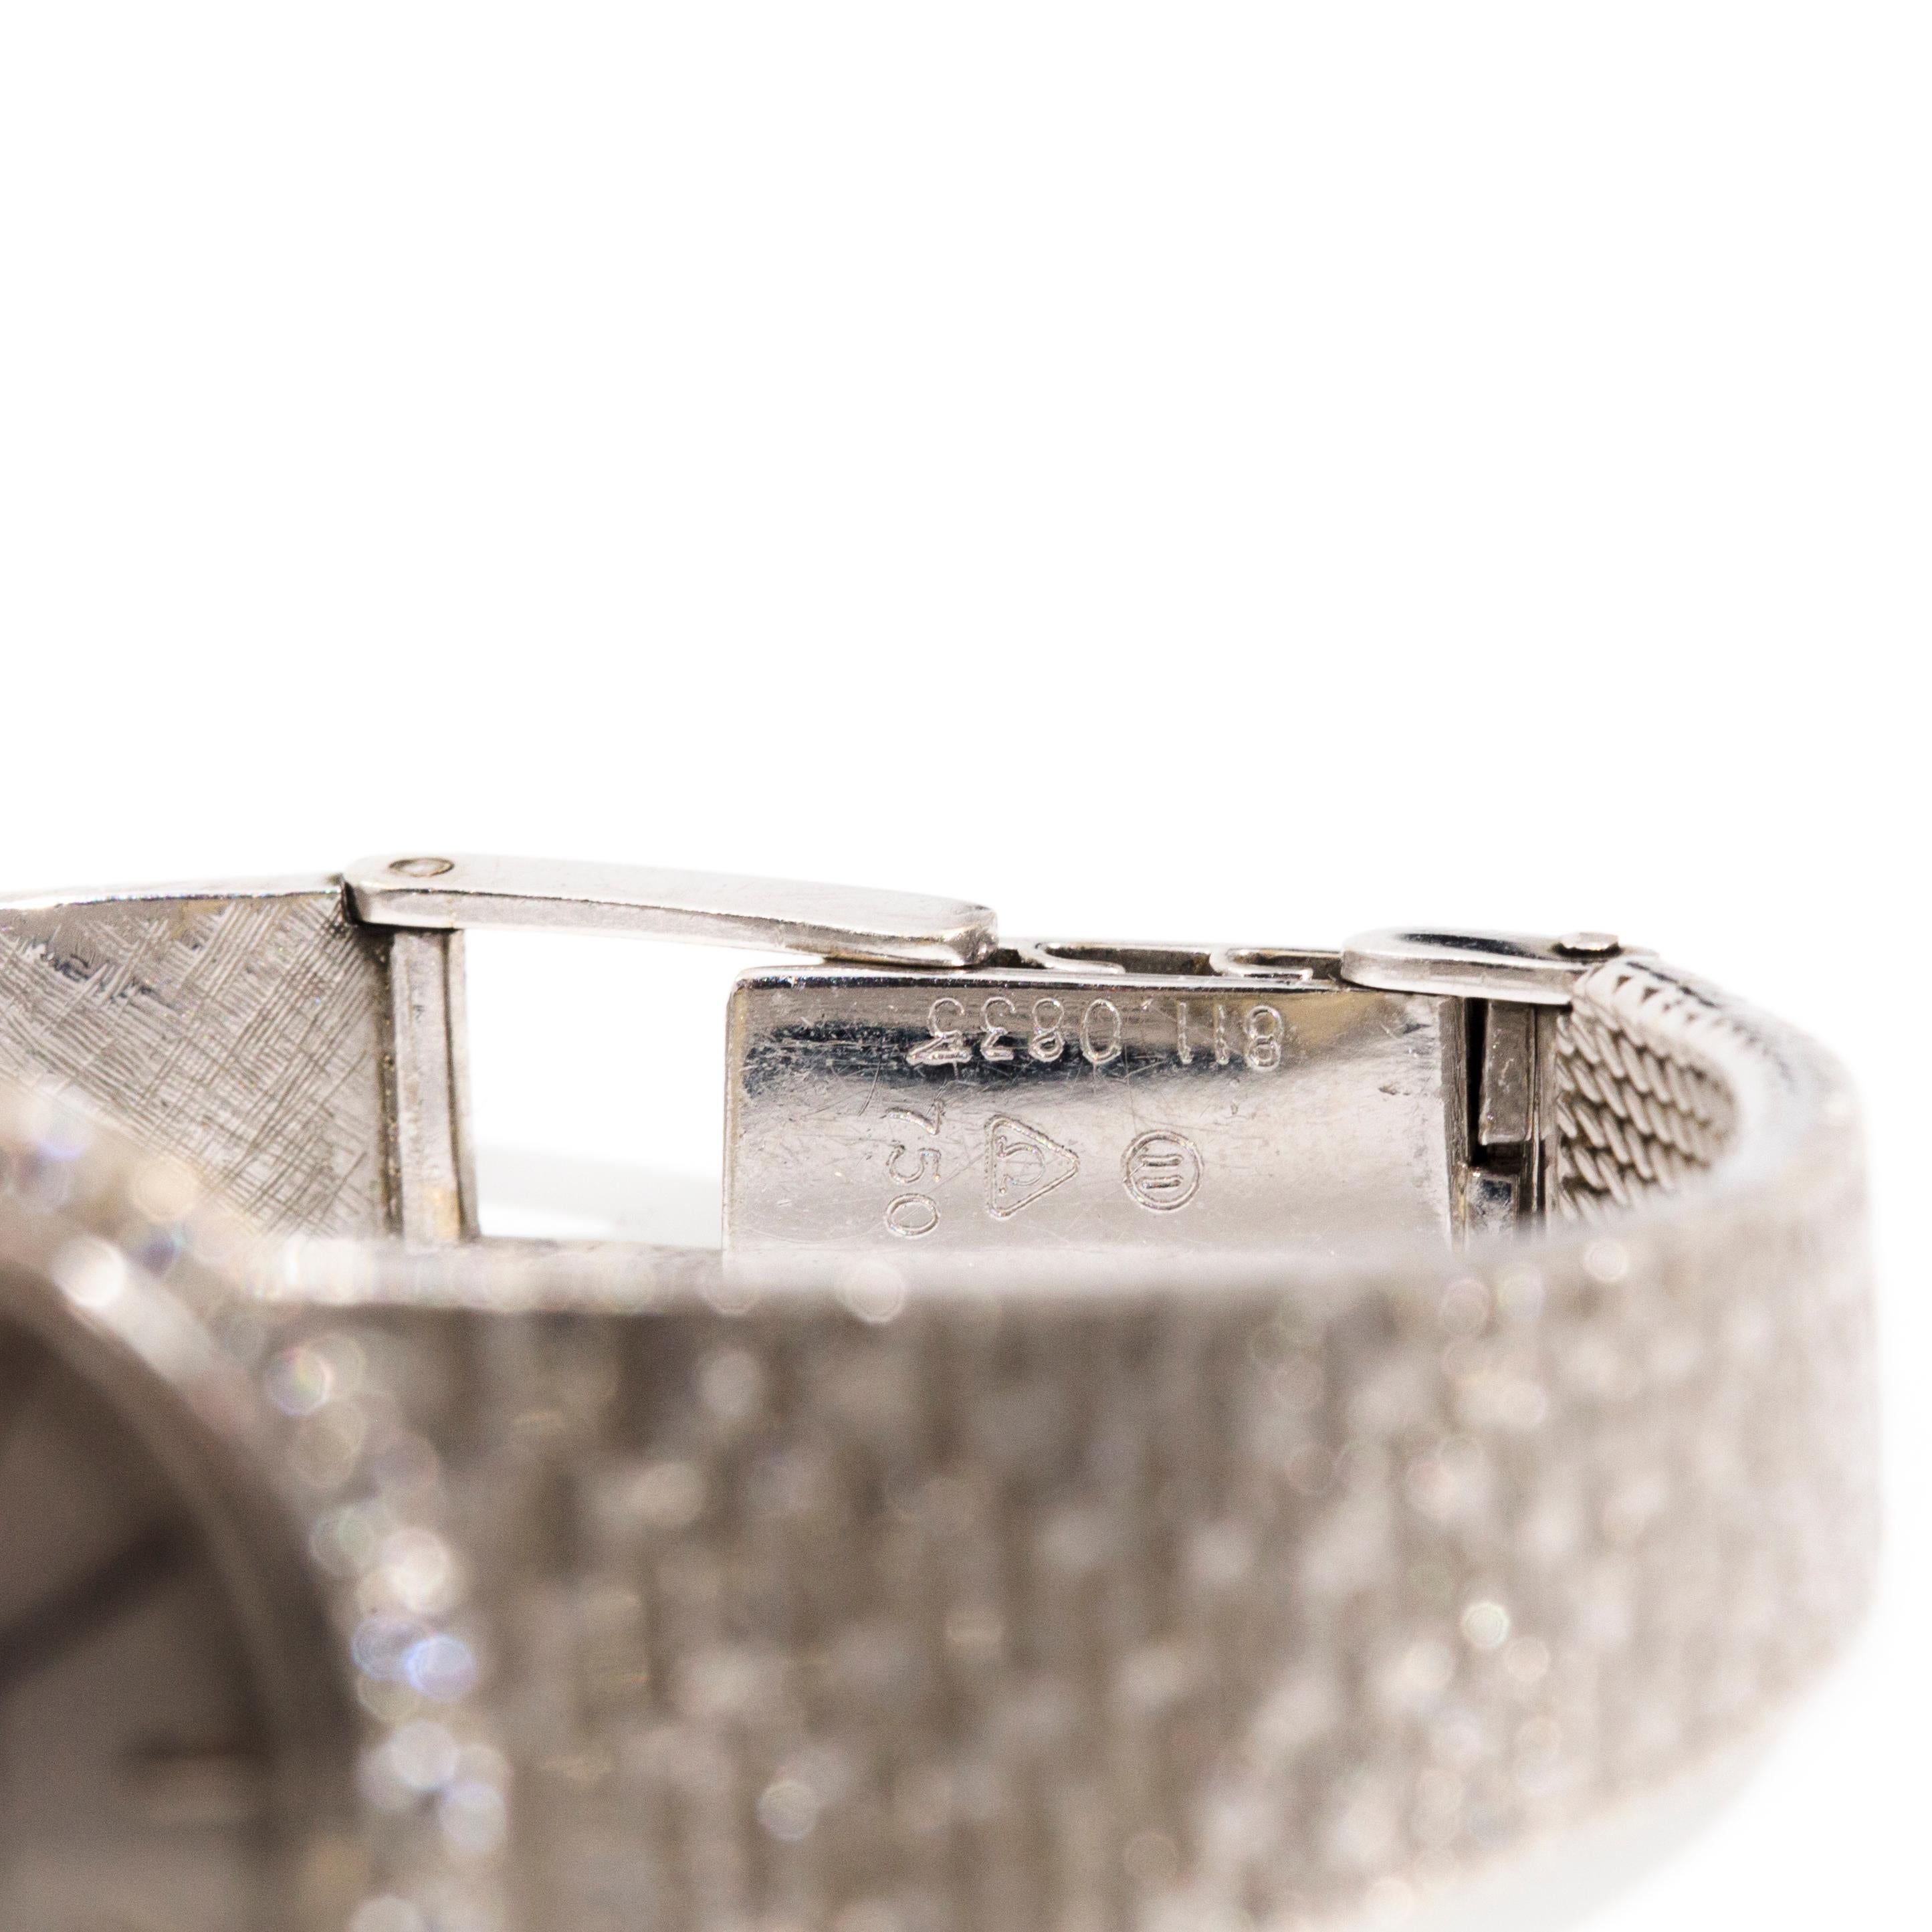  Omega De Ville 18 Carat White Gold and Diamond Vintage Ladies Automatic Watch 3